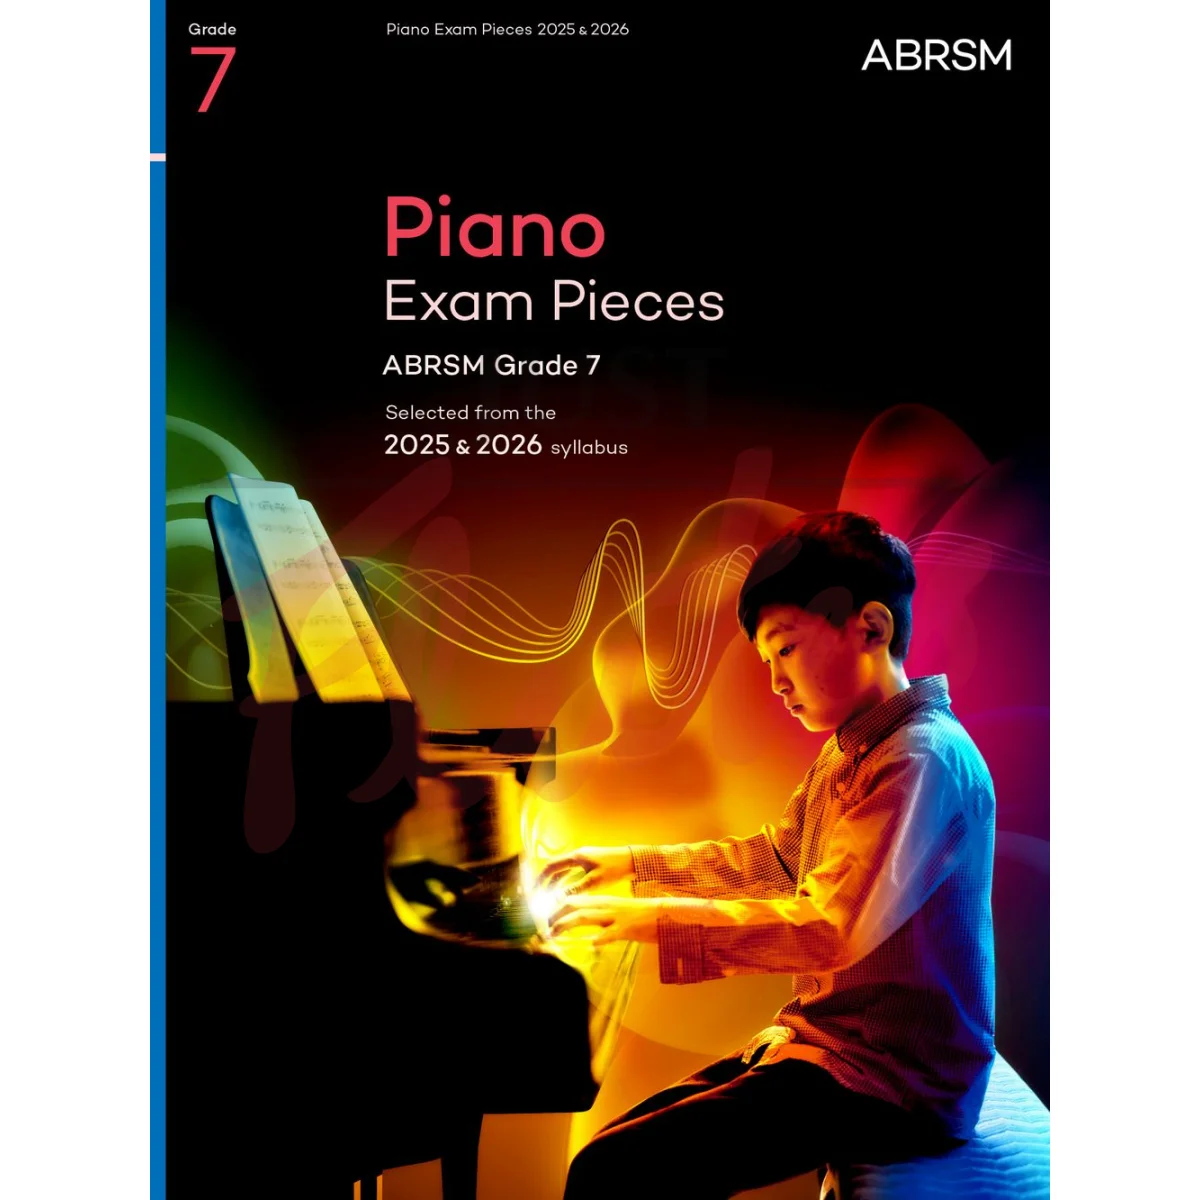 Piano Exam Pieces 2025-26, Grade 7